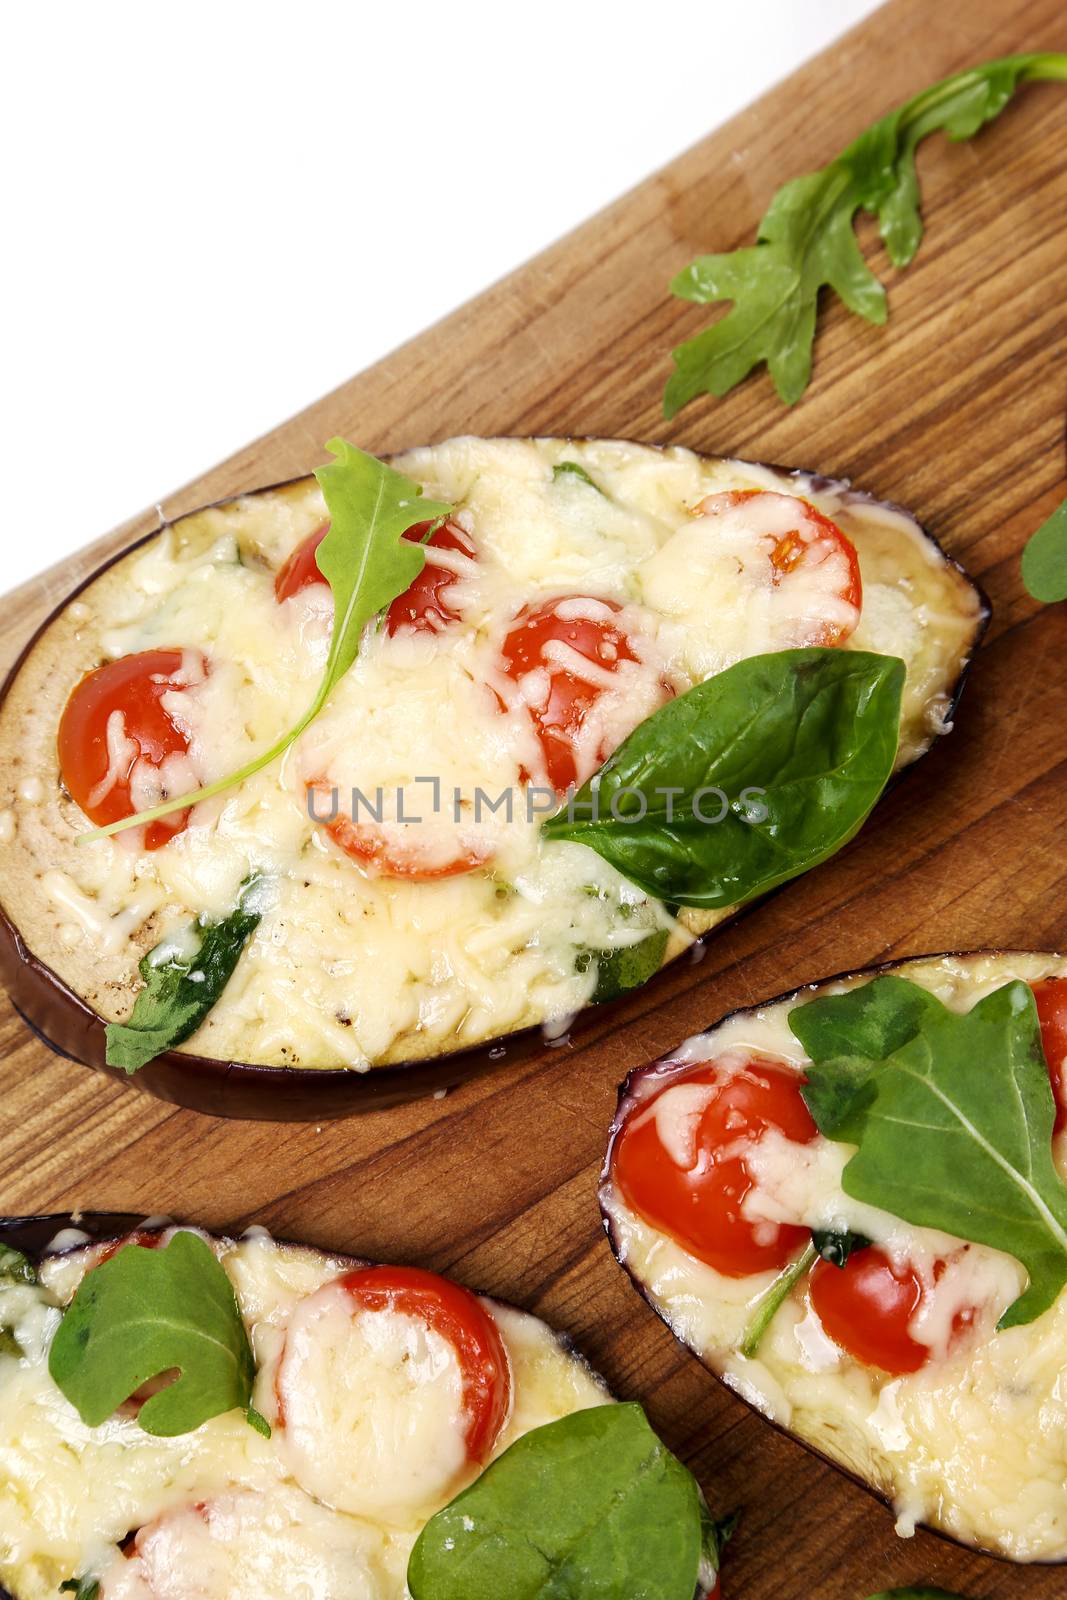 Eggplant pizza by rufatjumali